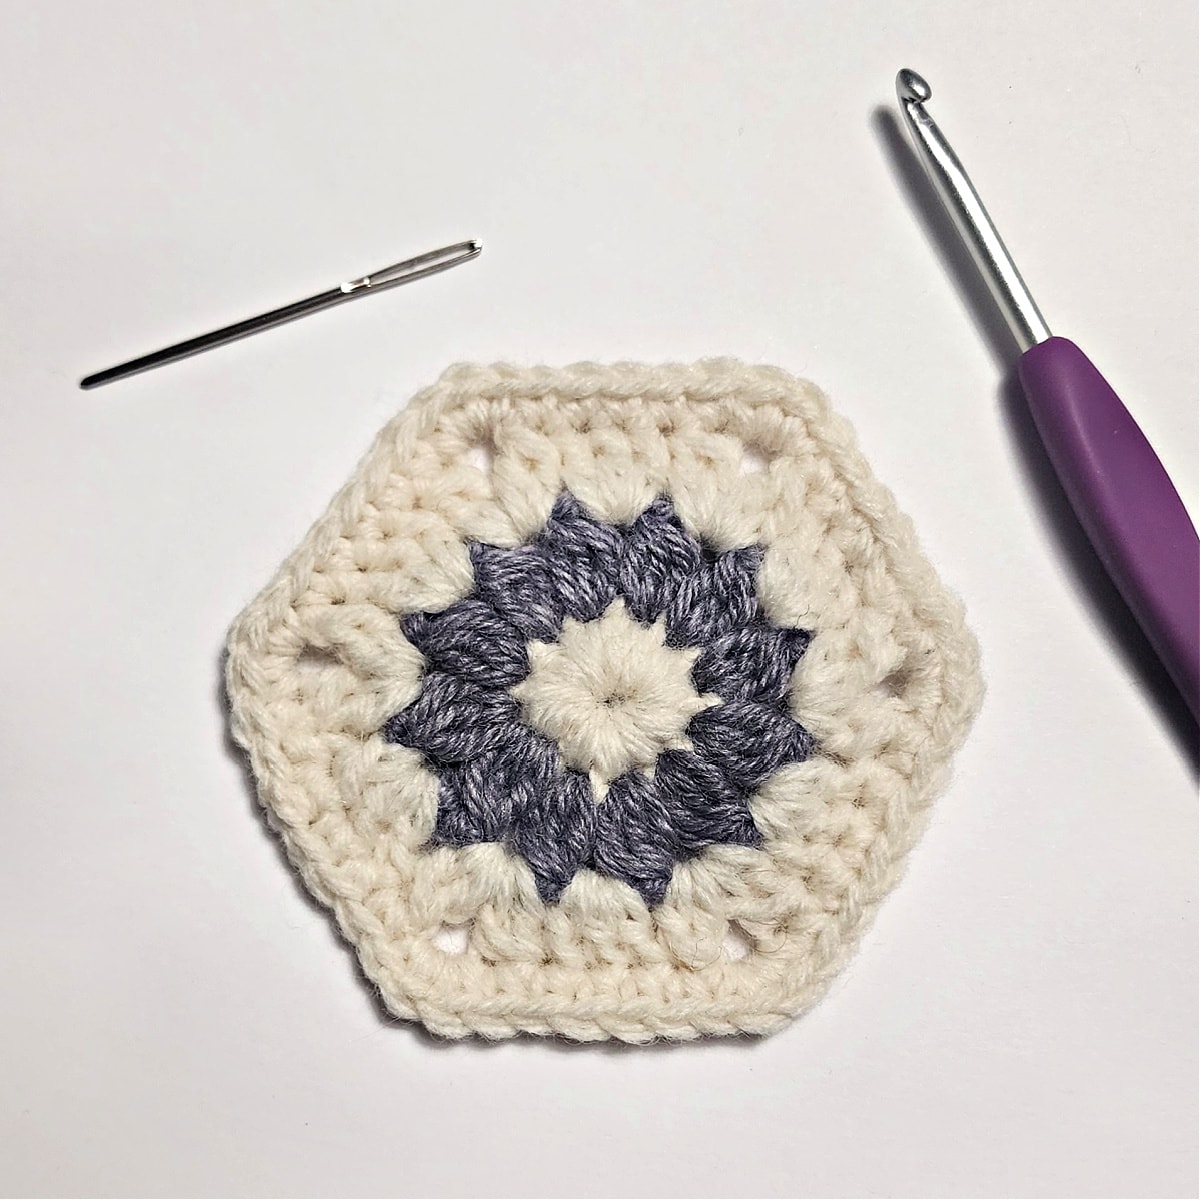 One 3 inch crochet hexagon motif in cream and purple.